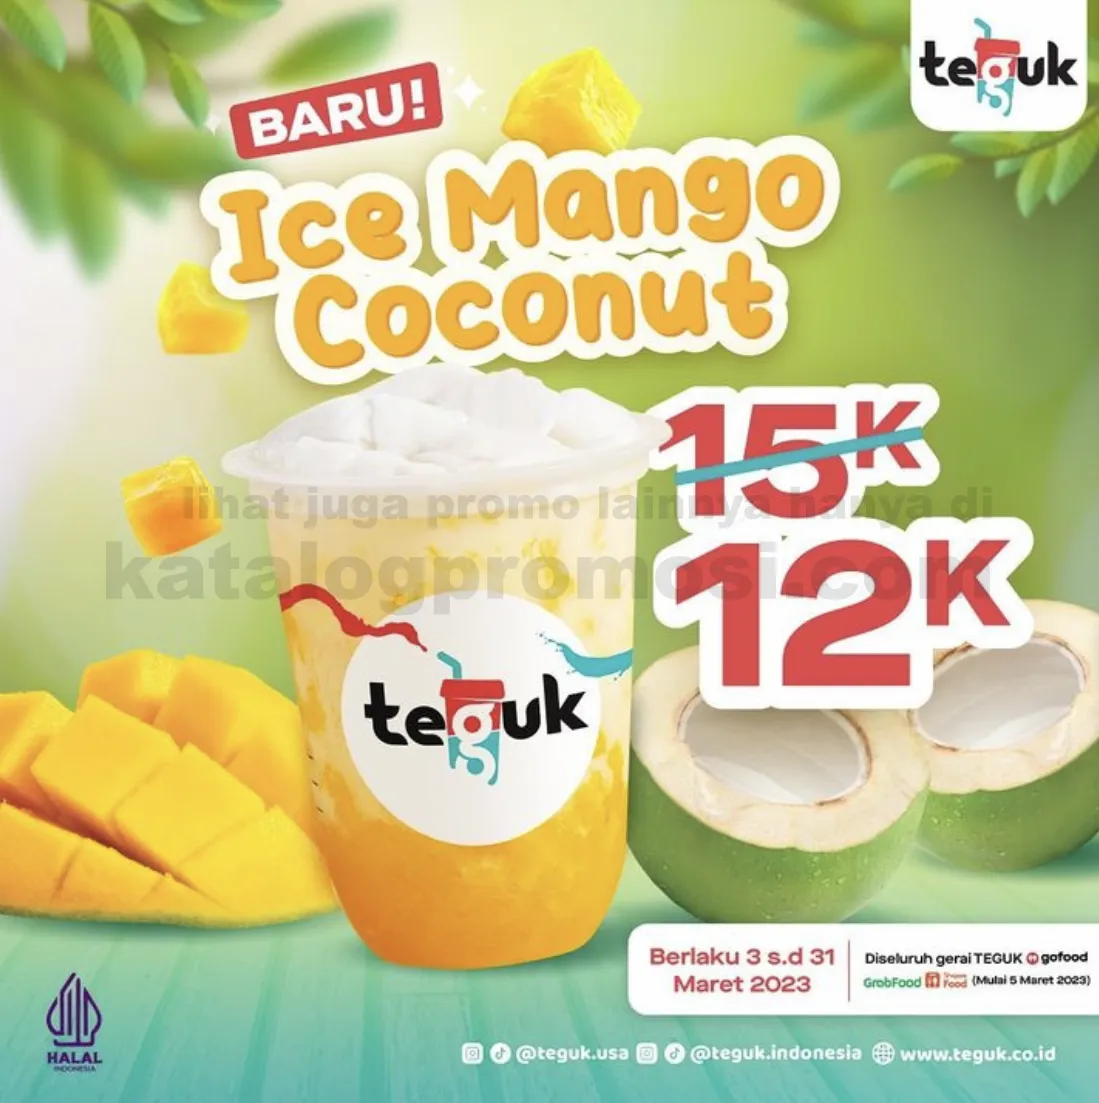 Promo TEGUK NEW MENU Ice Mango Coconut  - Harga Spesial cuma Rp. 12.000